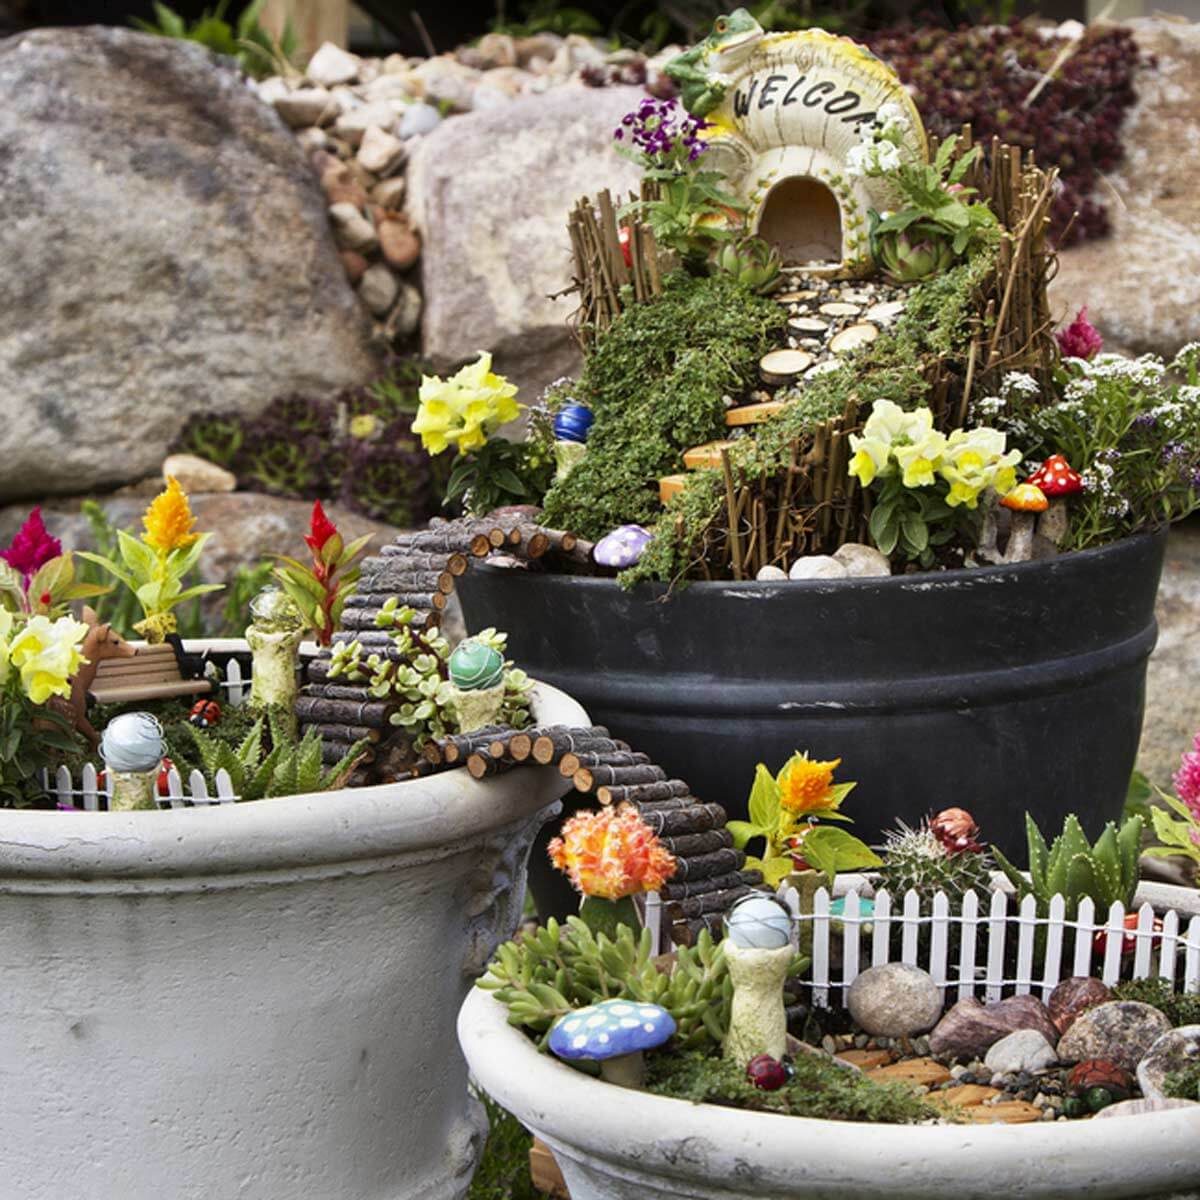 diy miniature garden house